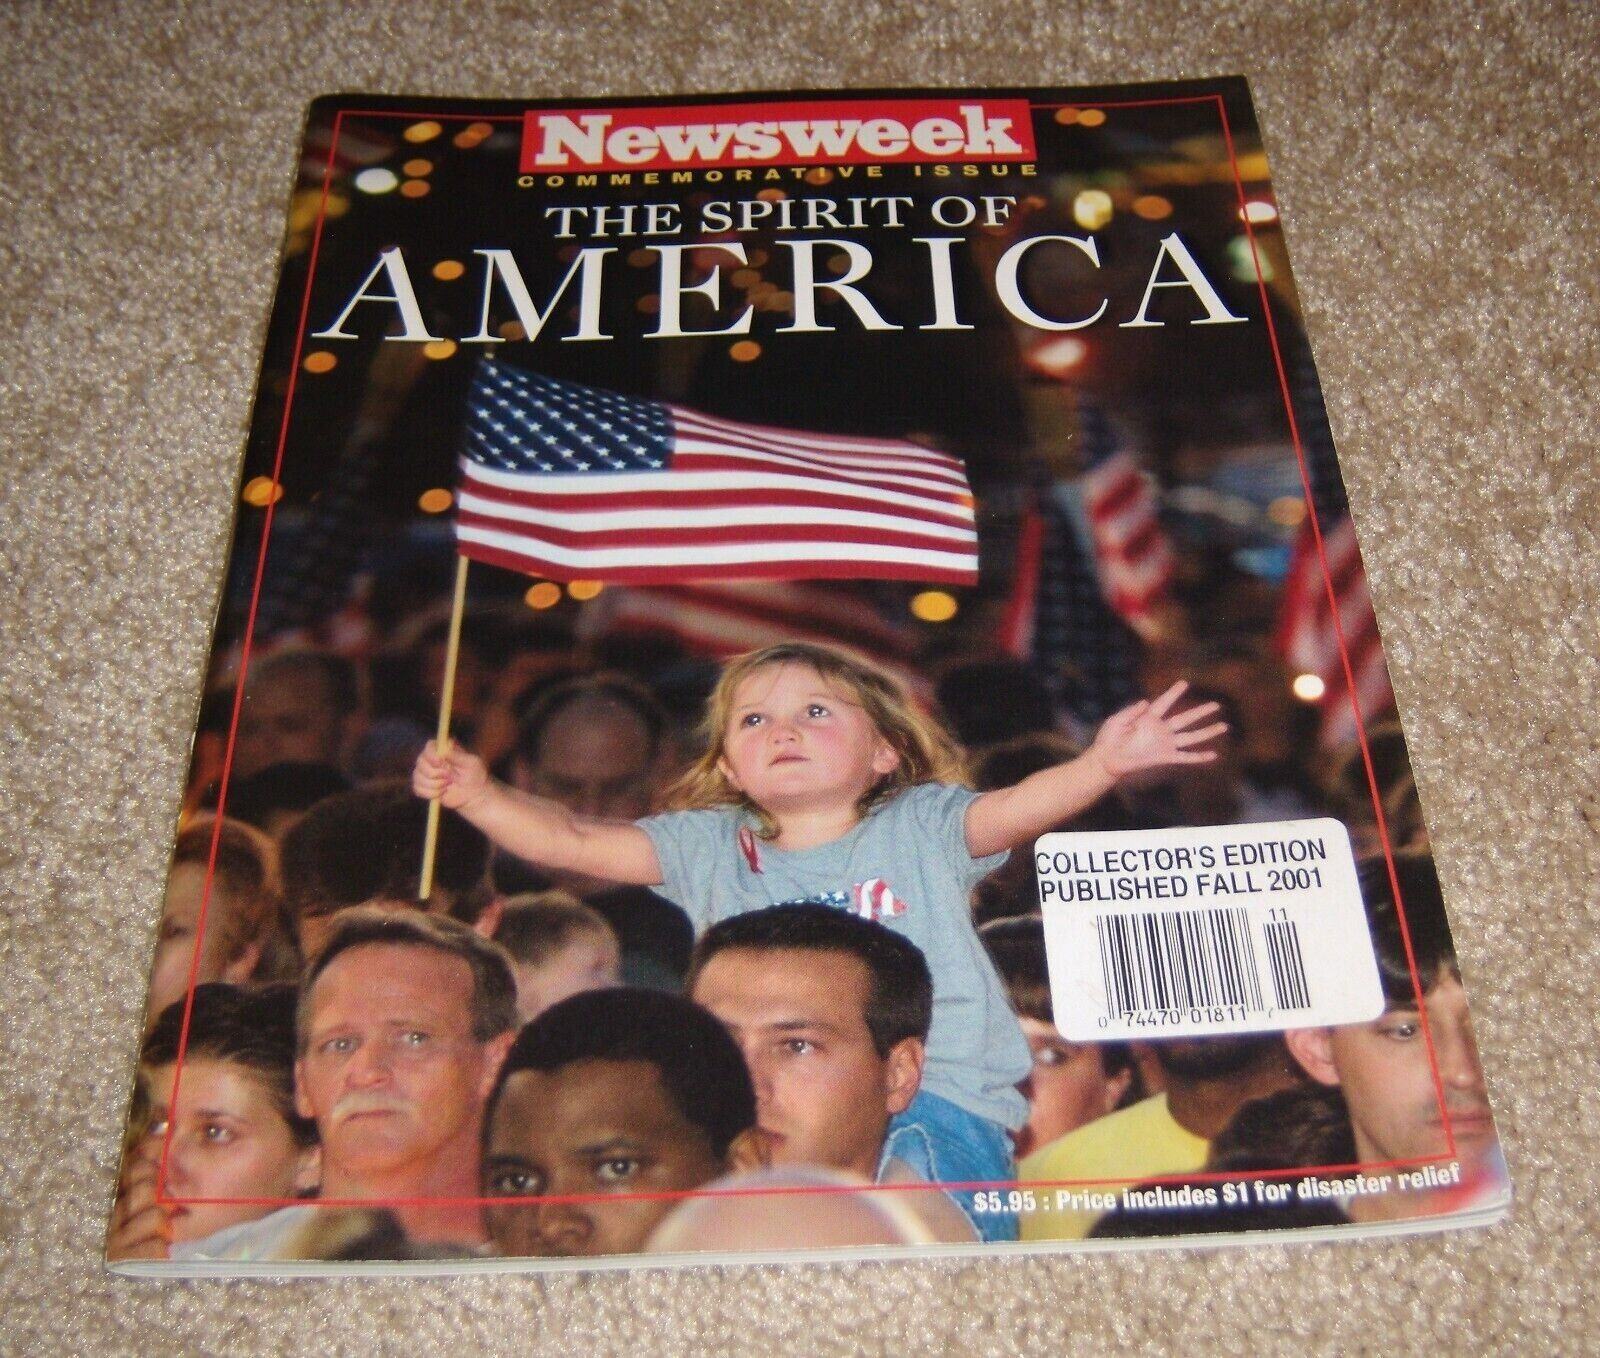 Newsweek Magazine Commemorative Issue....The Spirit of America. Fall 2001